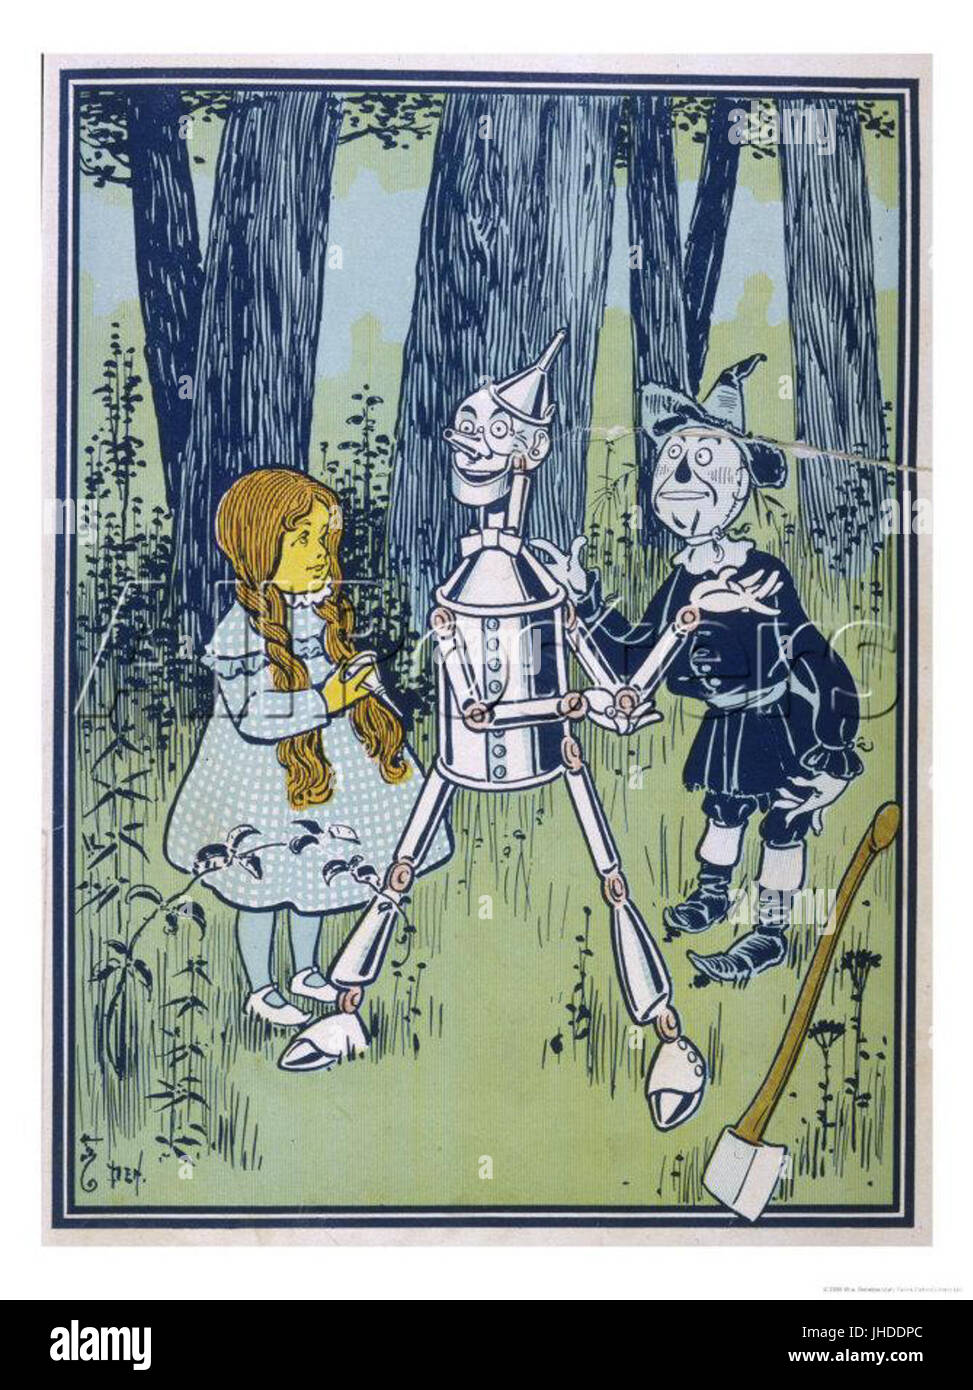 Illustration by W. W. Denslow from The Wonderful Wizard of Oz, Stock Photo